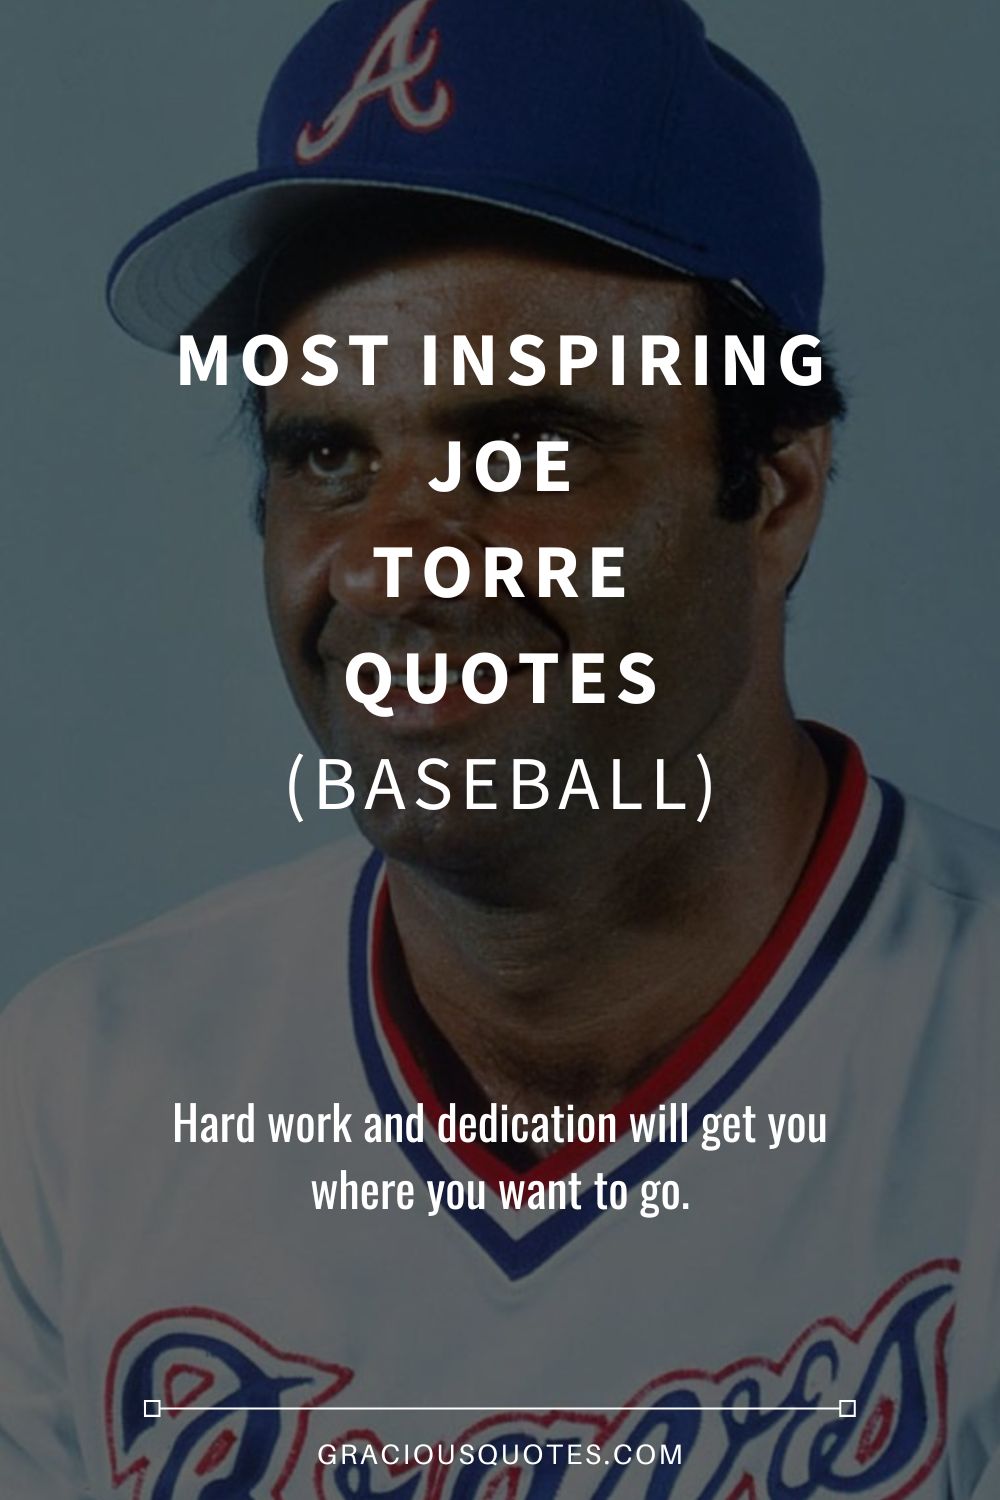 Most Inspiring Joe Torre Quotes (BASEBALL) - Gracious Quotes